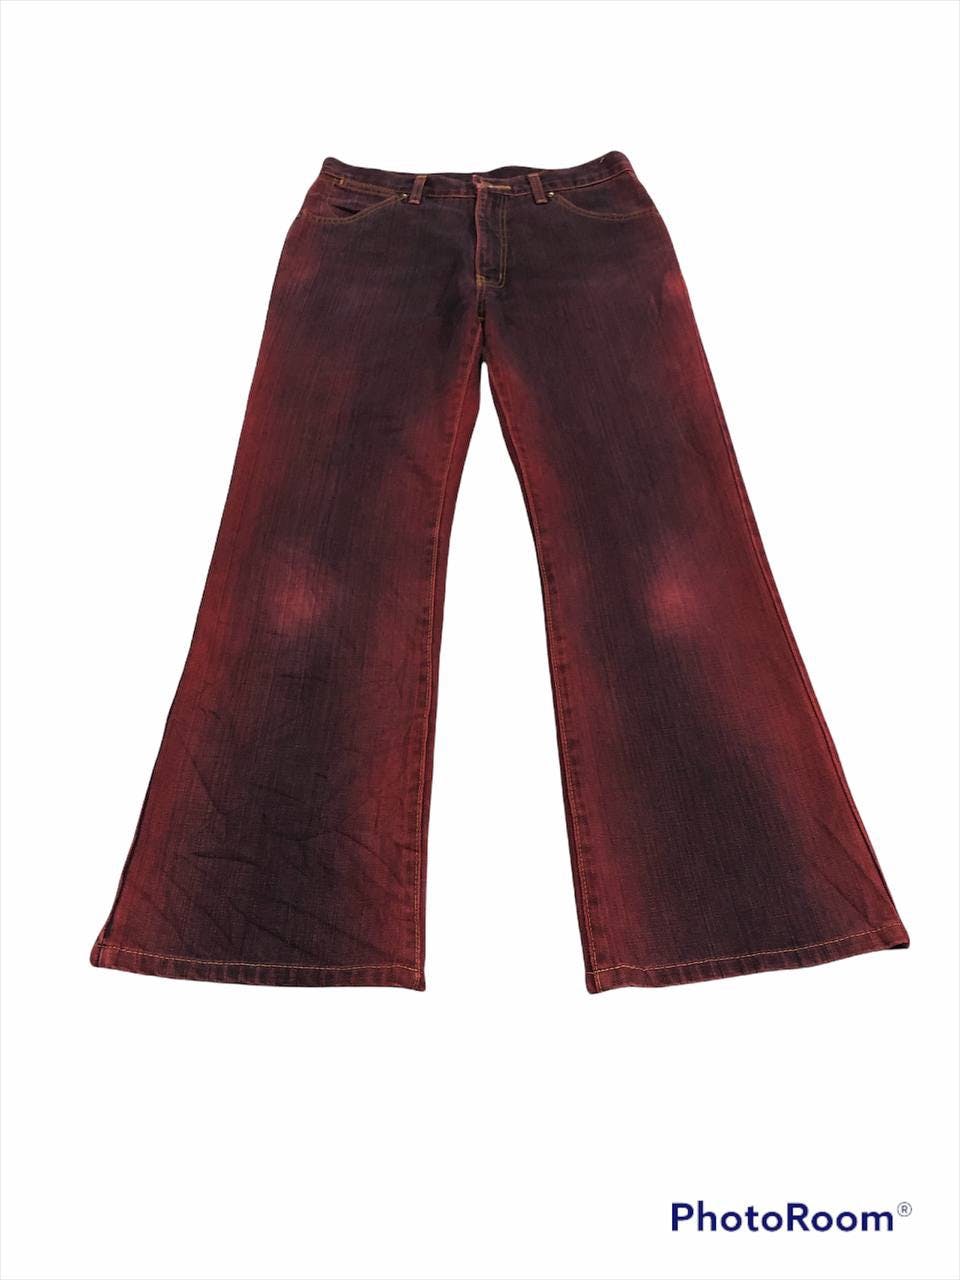 Vintage Wrangler Faded Marron Denim Pants - 2